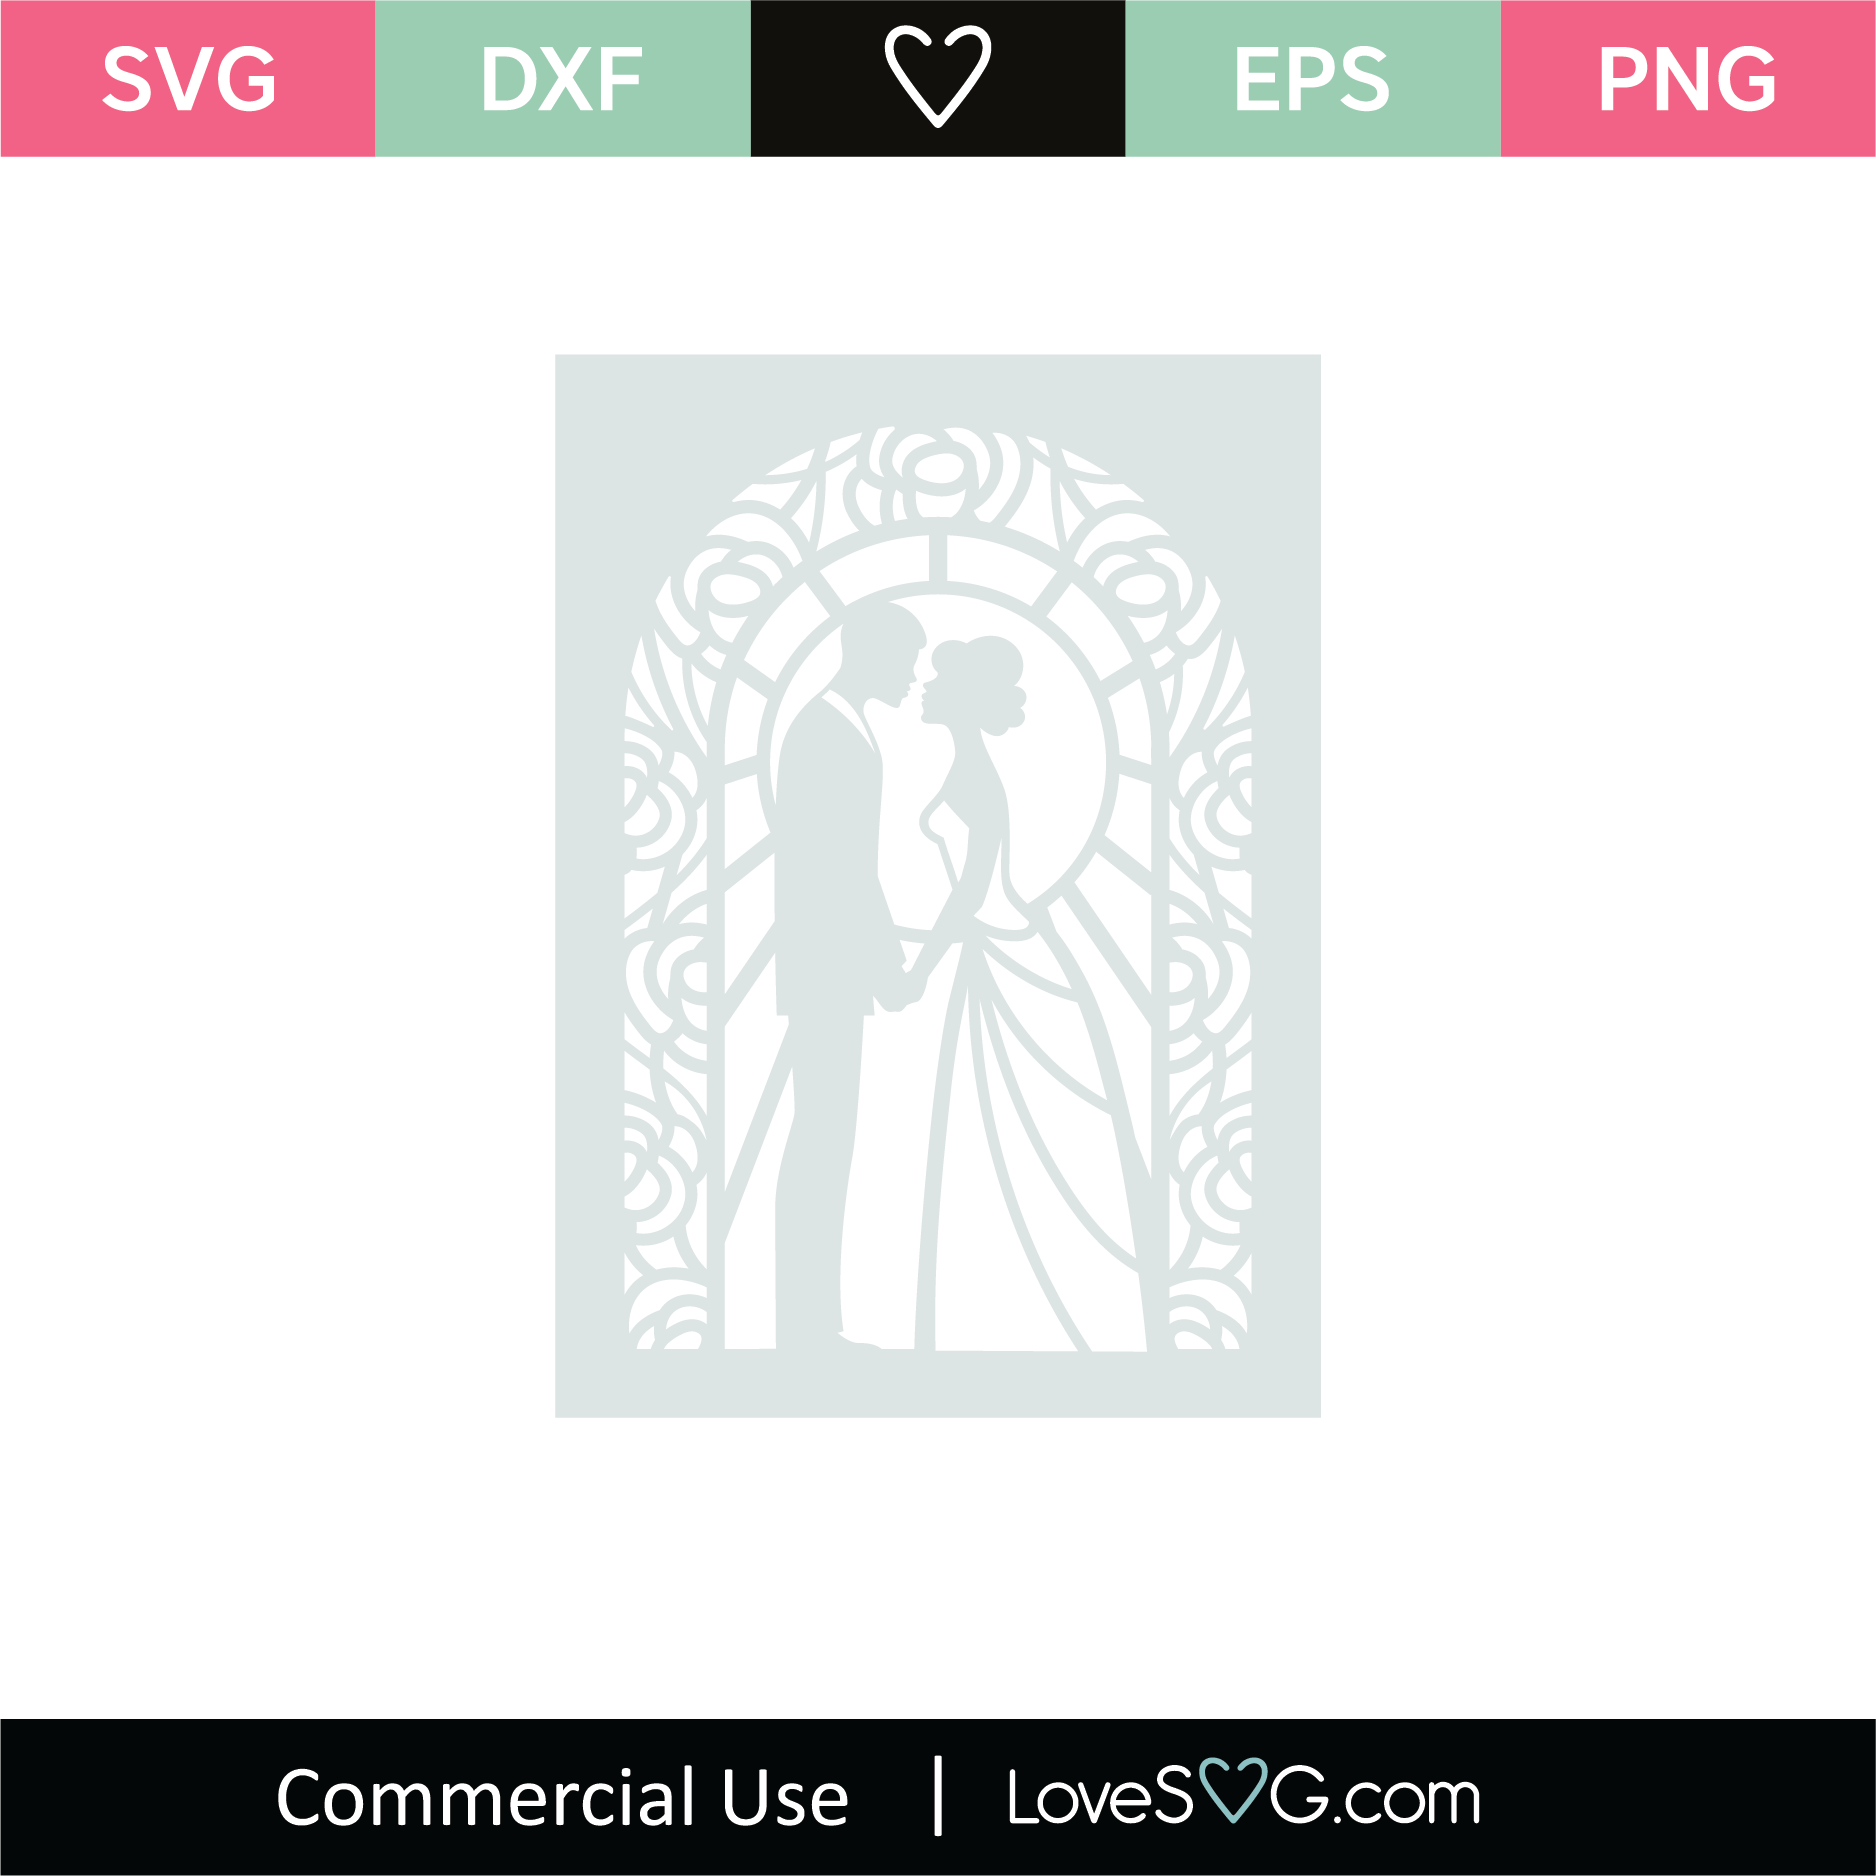 Download Bride and Groom Silhouette SVG Cut File - Lovesvg.com